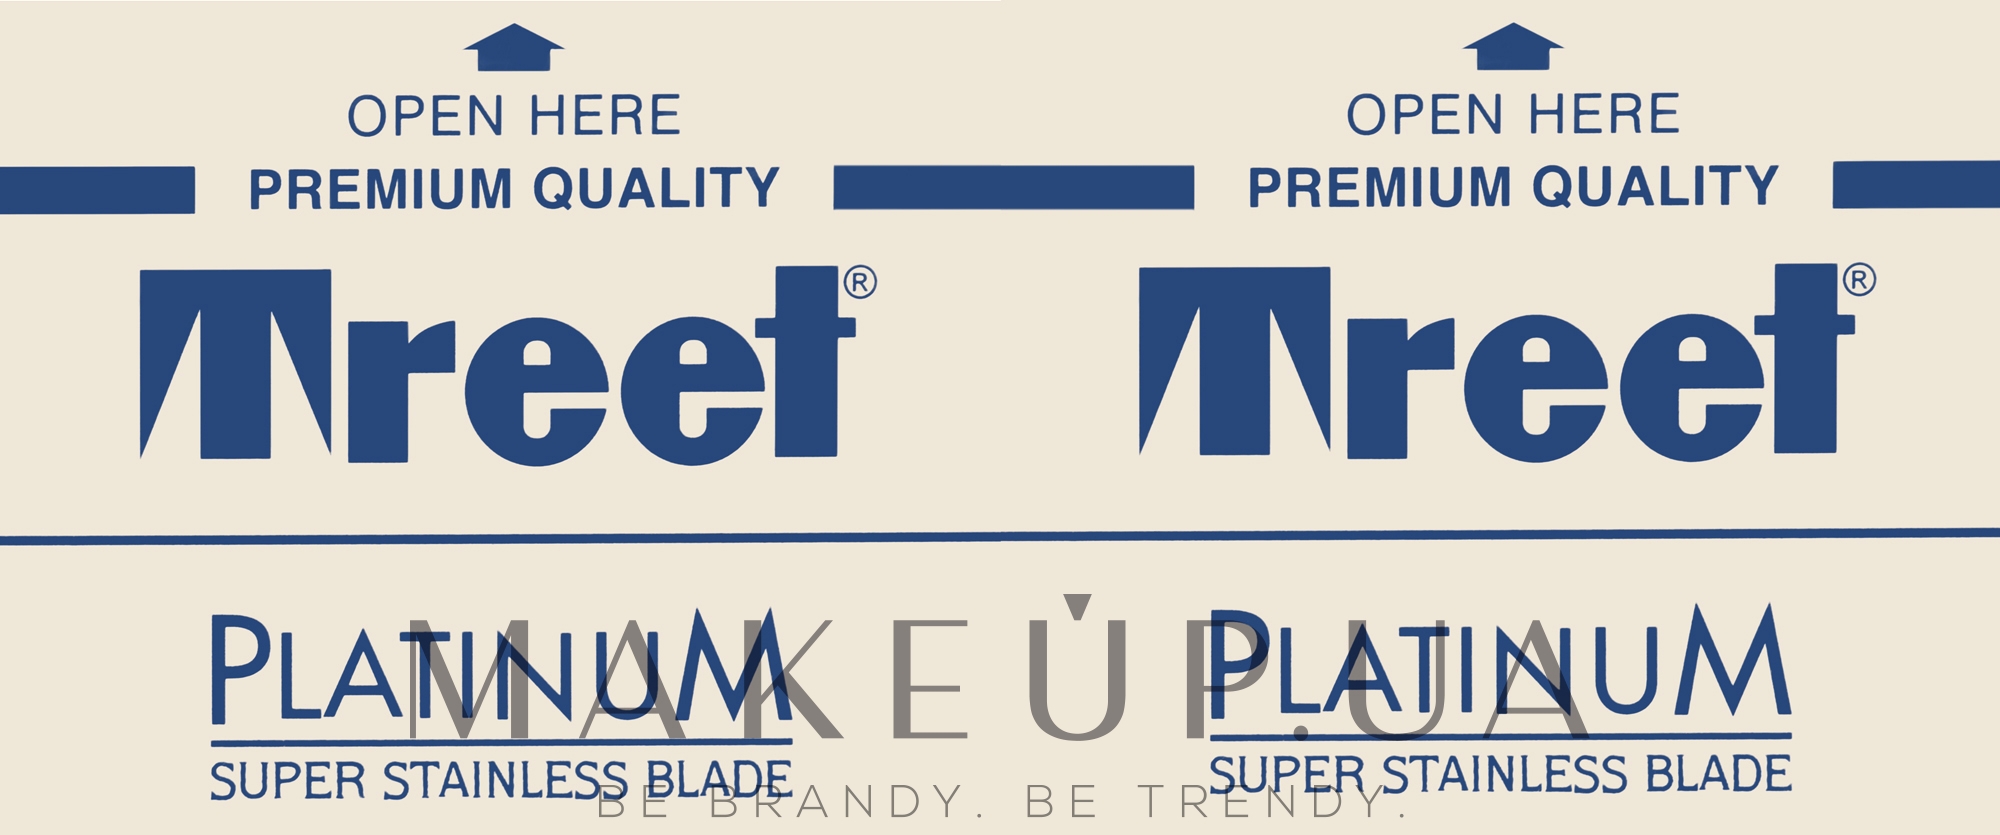 Лезвия для многоразовых станков, 20x5 шт - Treet Platinum Premium Quality Super Stainless Blade — фото 20x5шт